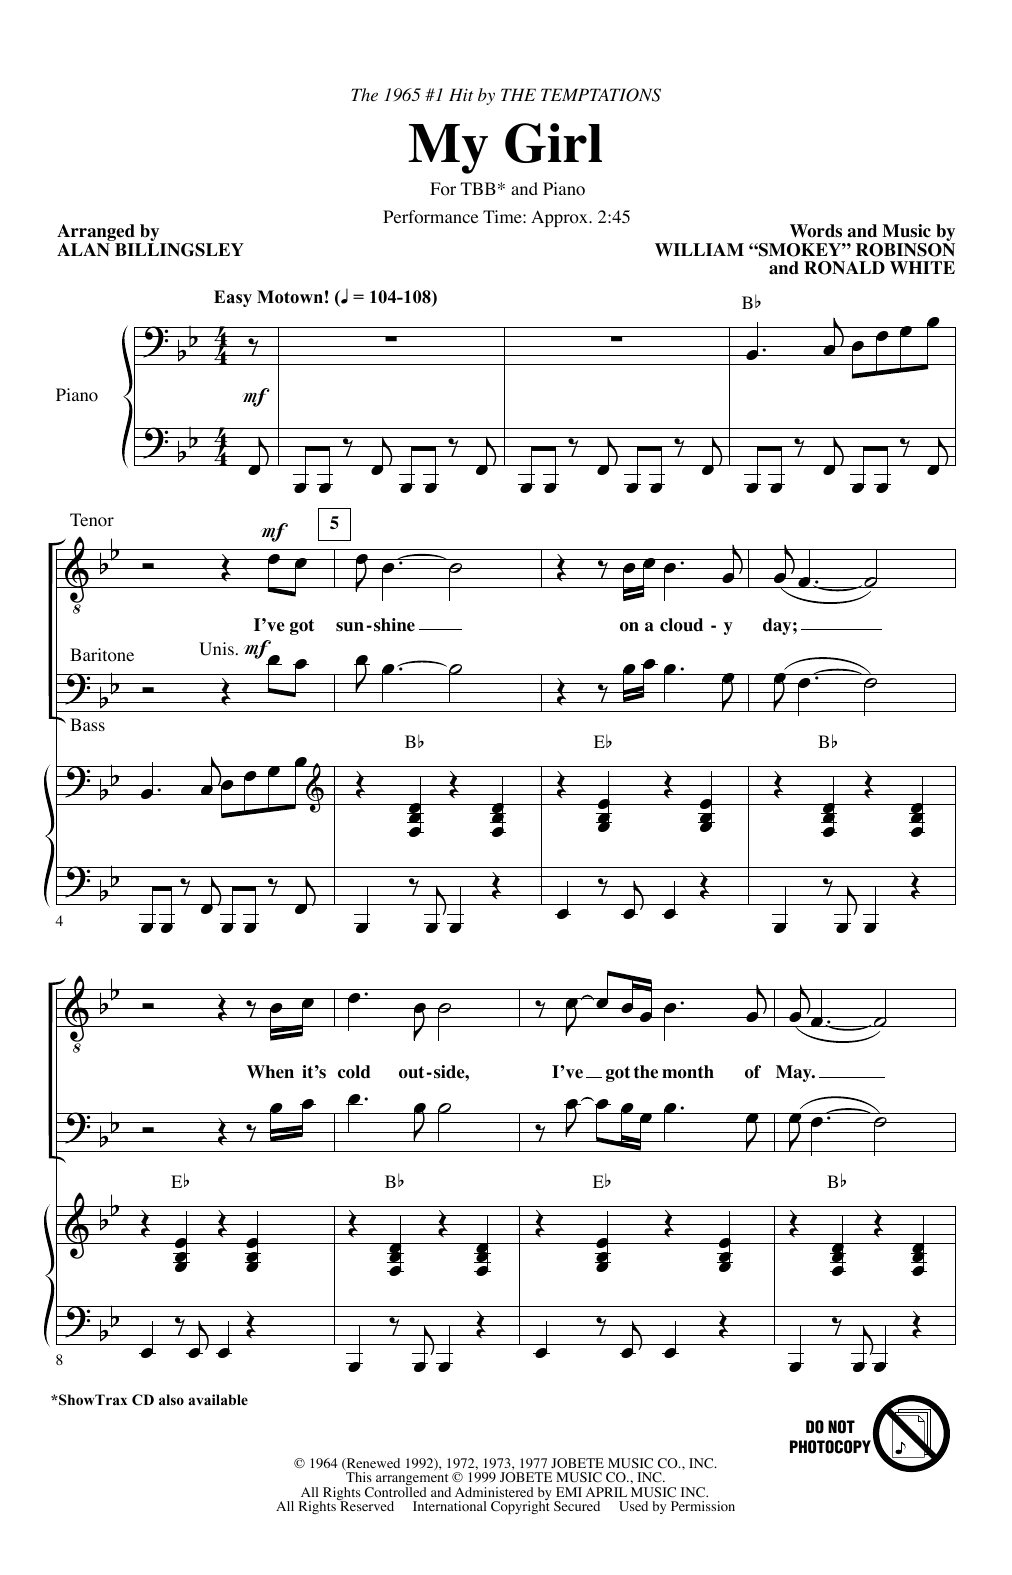 The Temptations My Girl (arr. Alan Billingsley) Sheet Music Notes & Chords for TTBB Choir - Download or Print PDF